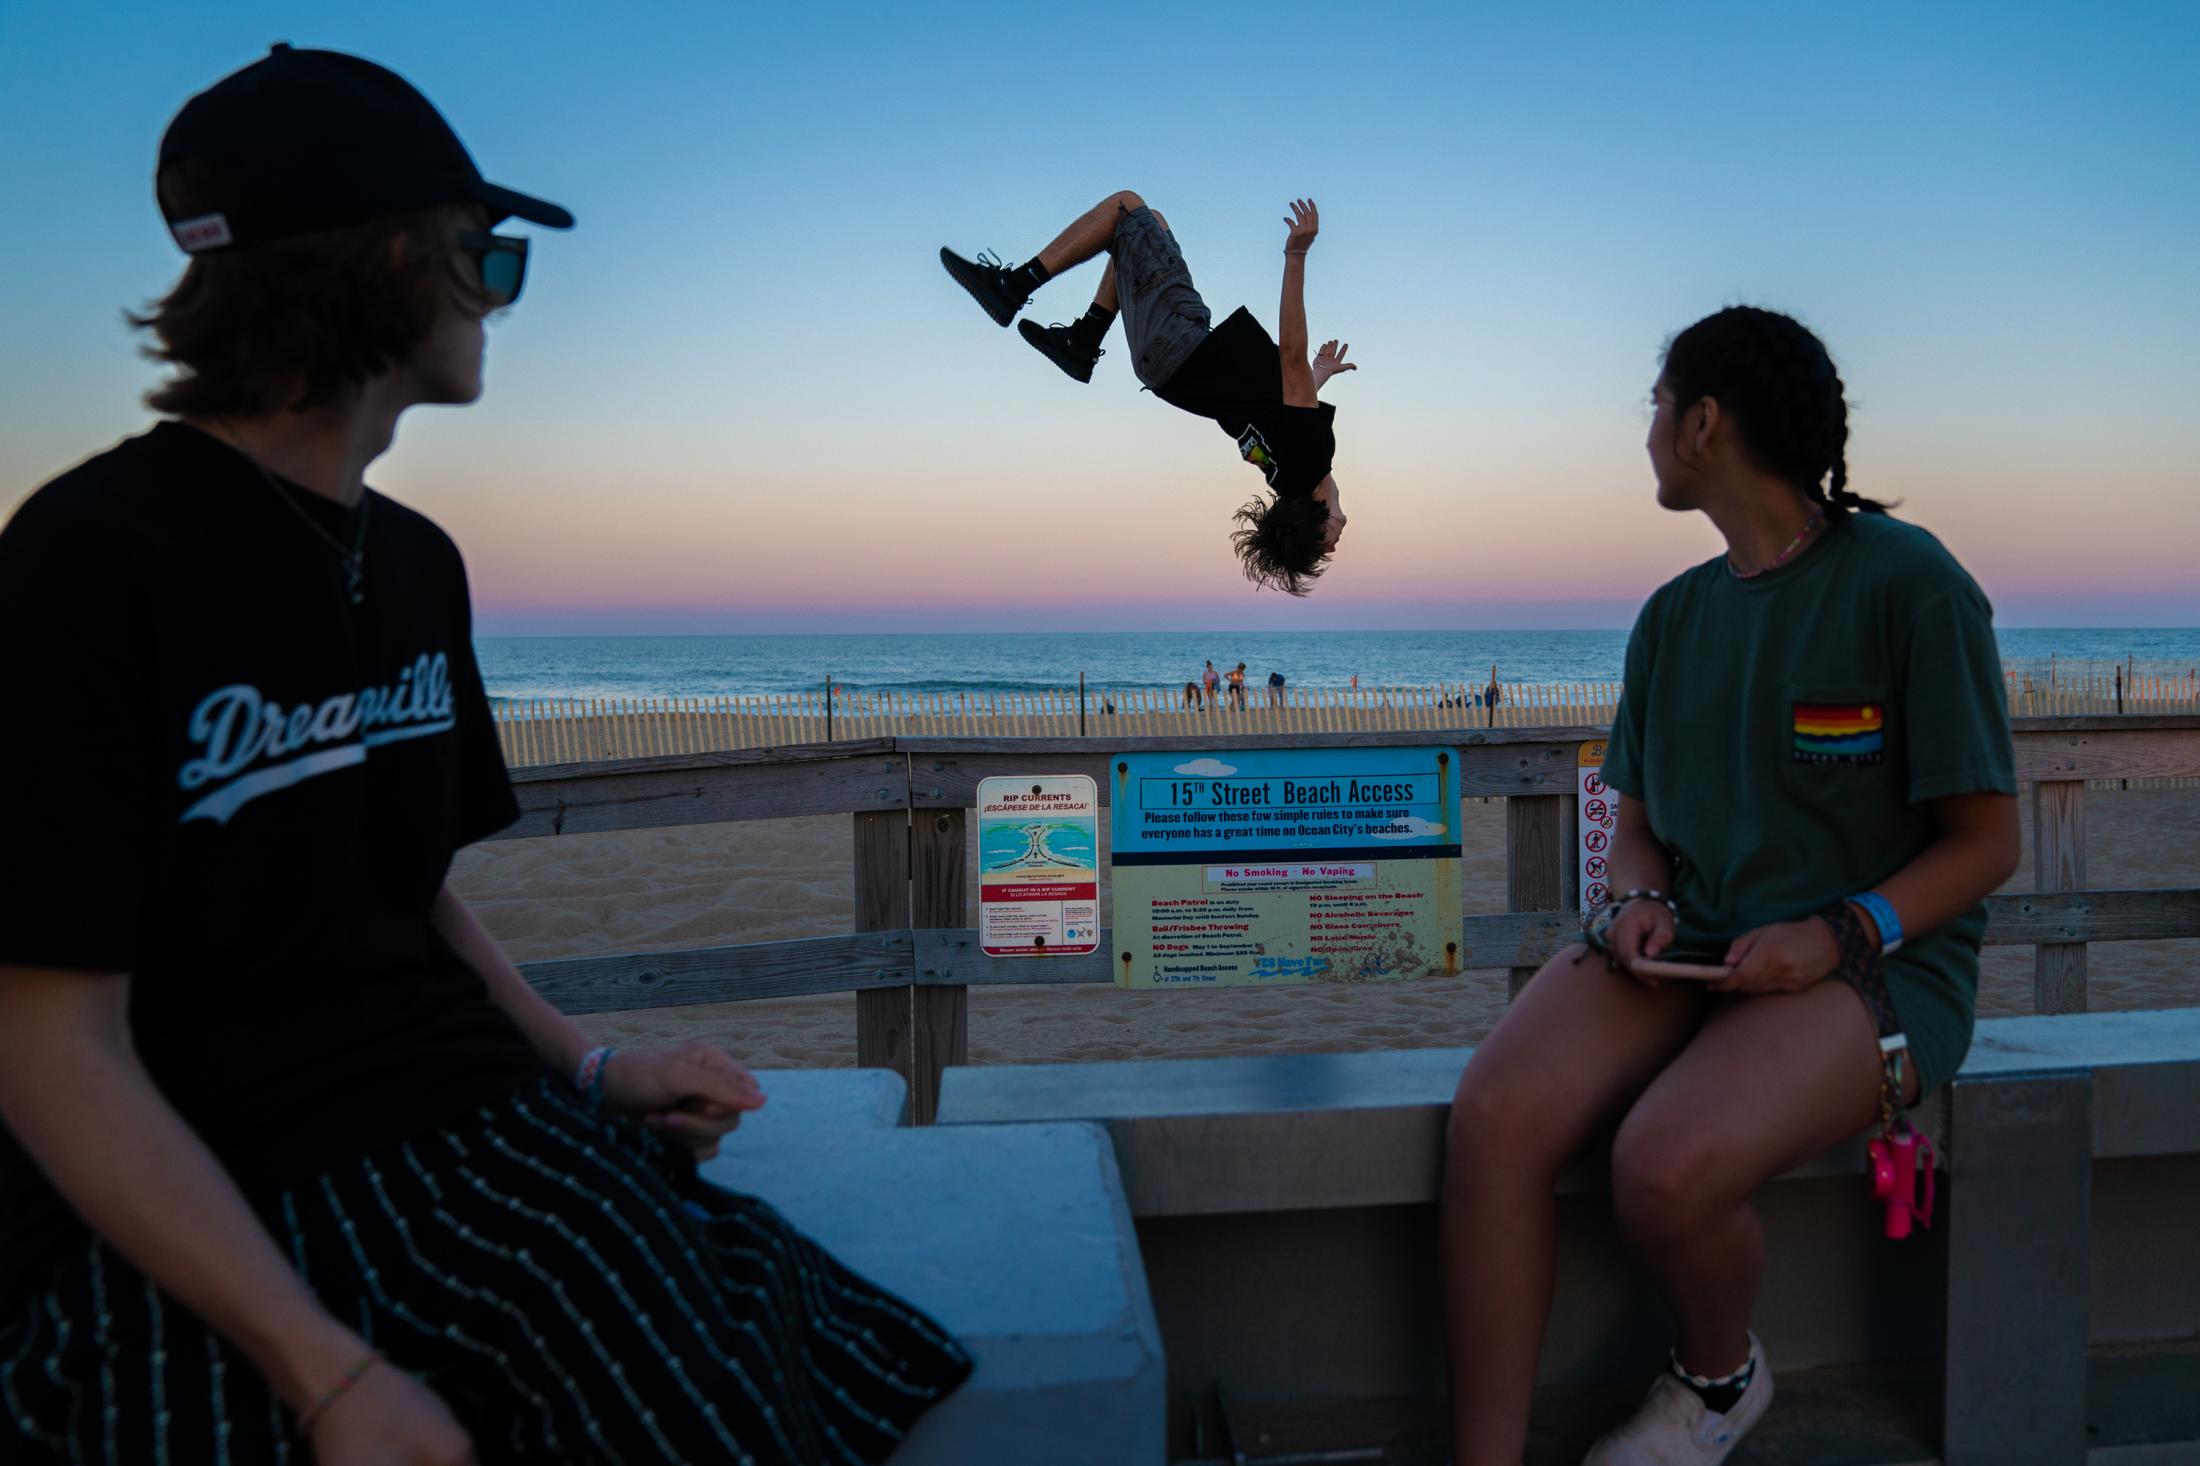 People enjoy their time on the Boardwalk in Ocean City, MD on June 16, 2021.